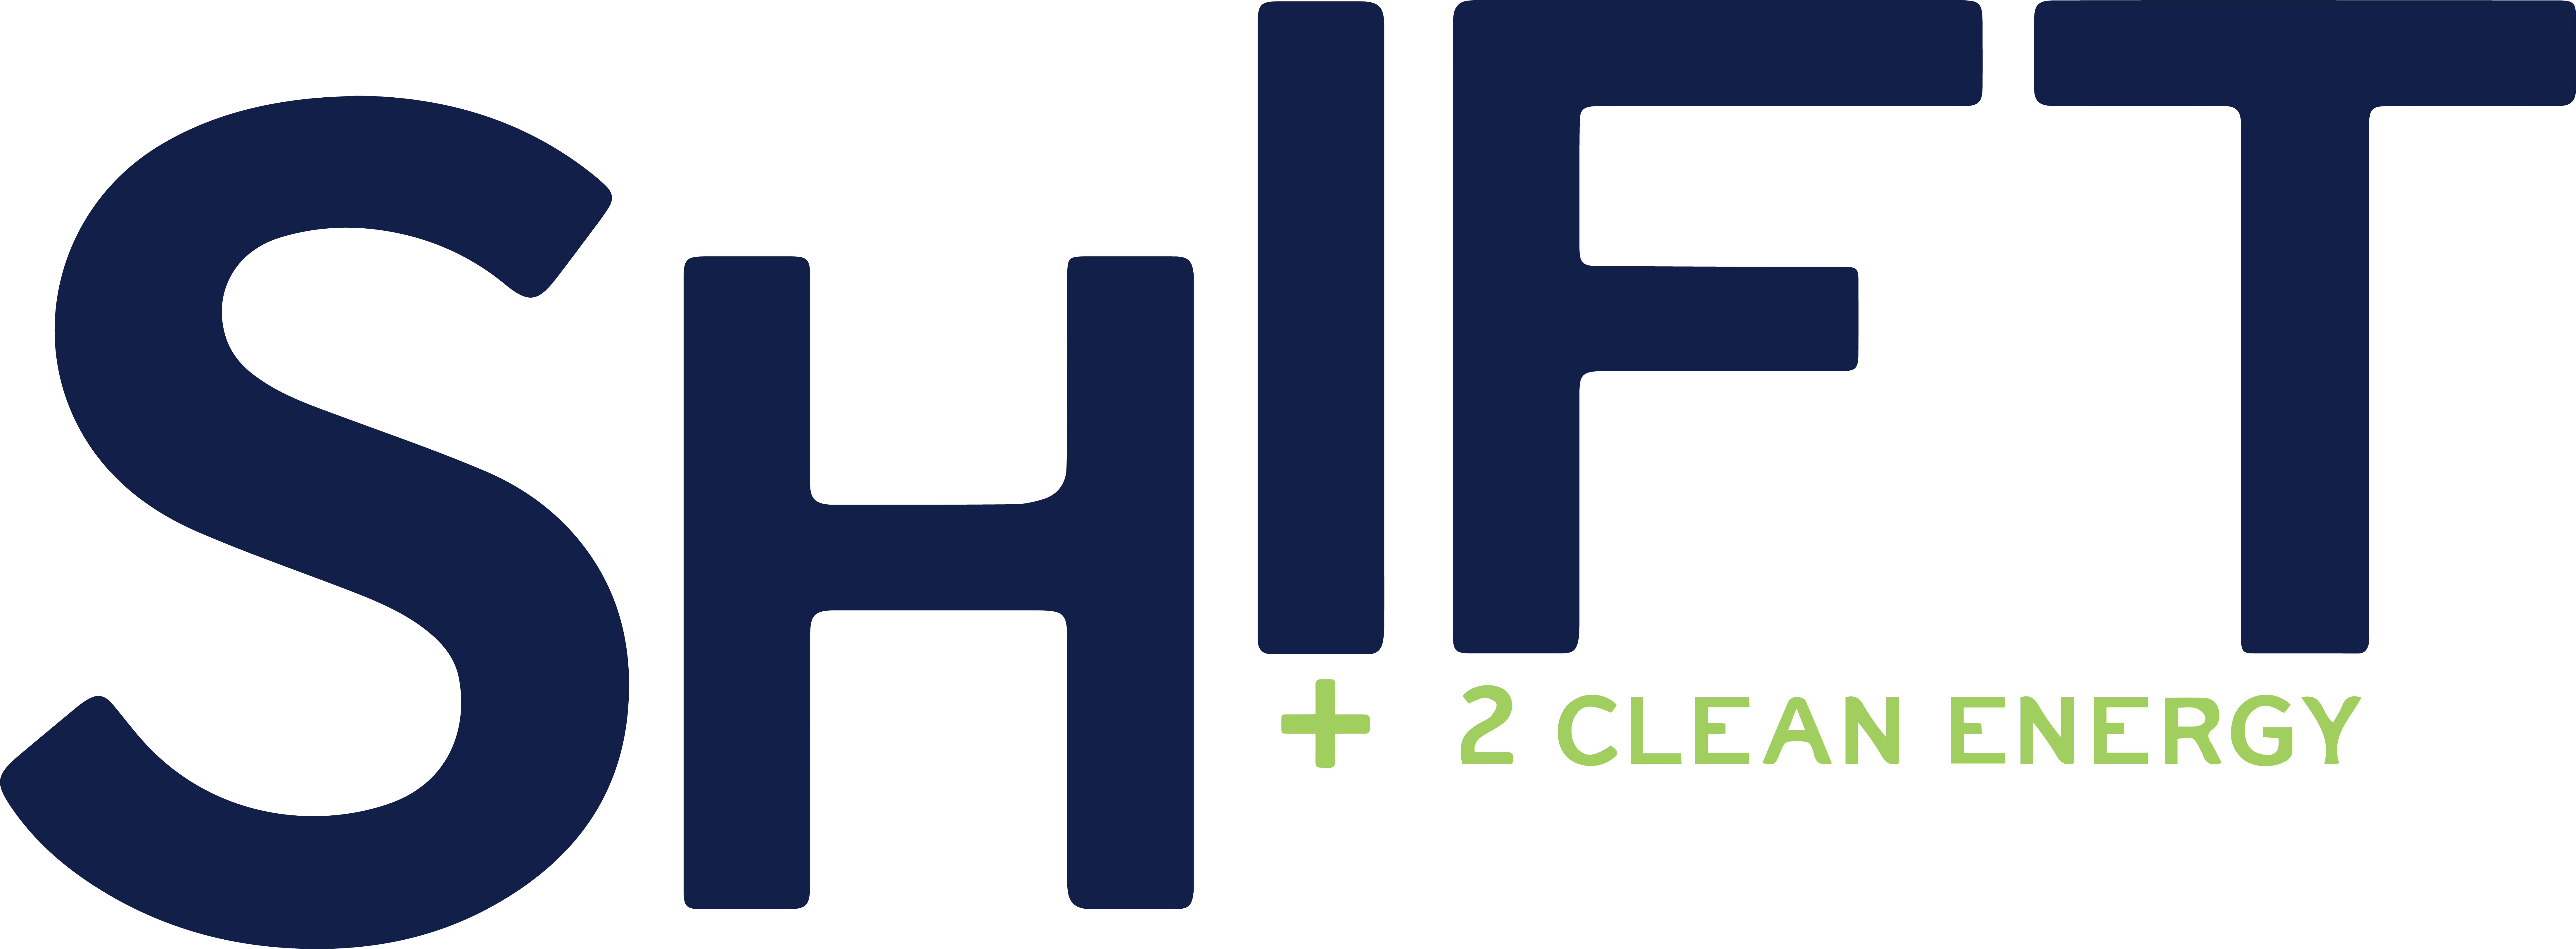 Shift (2 Clean Energy) Logo